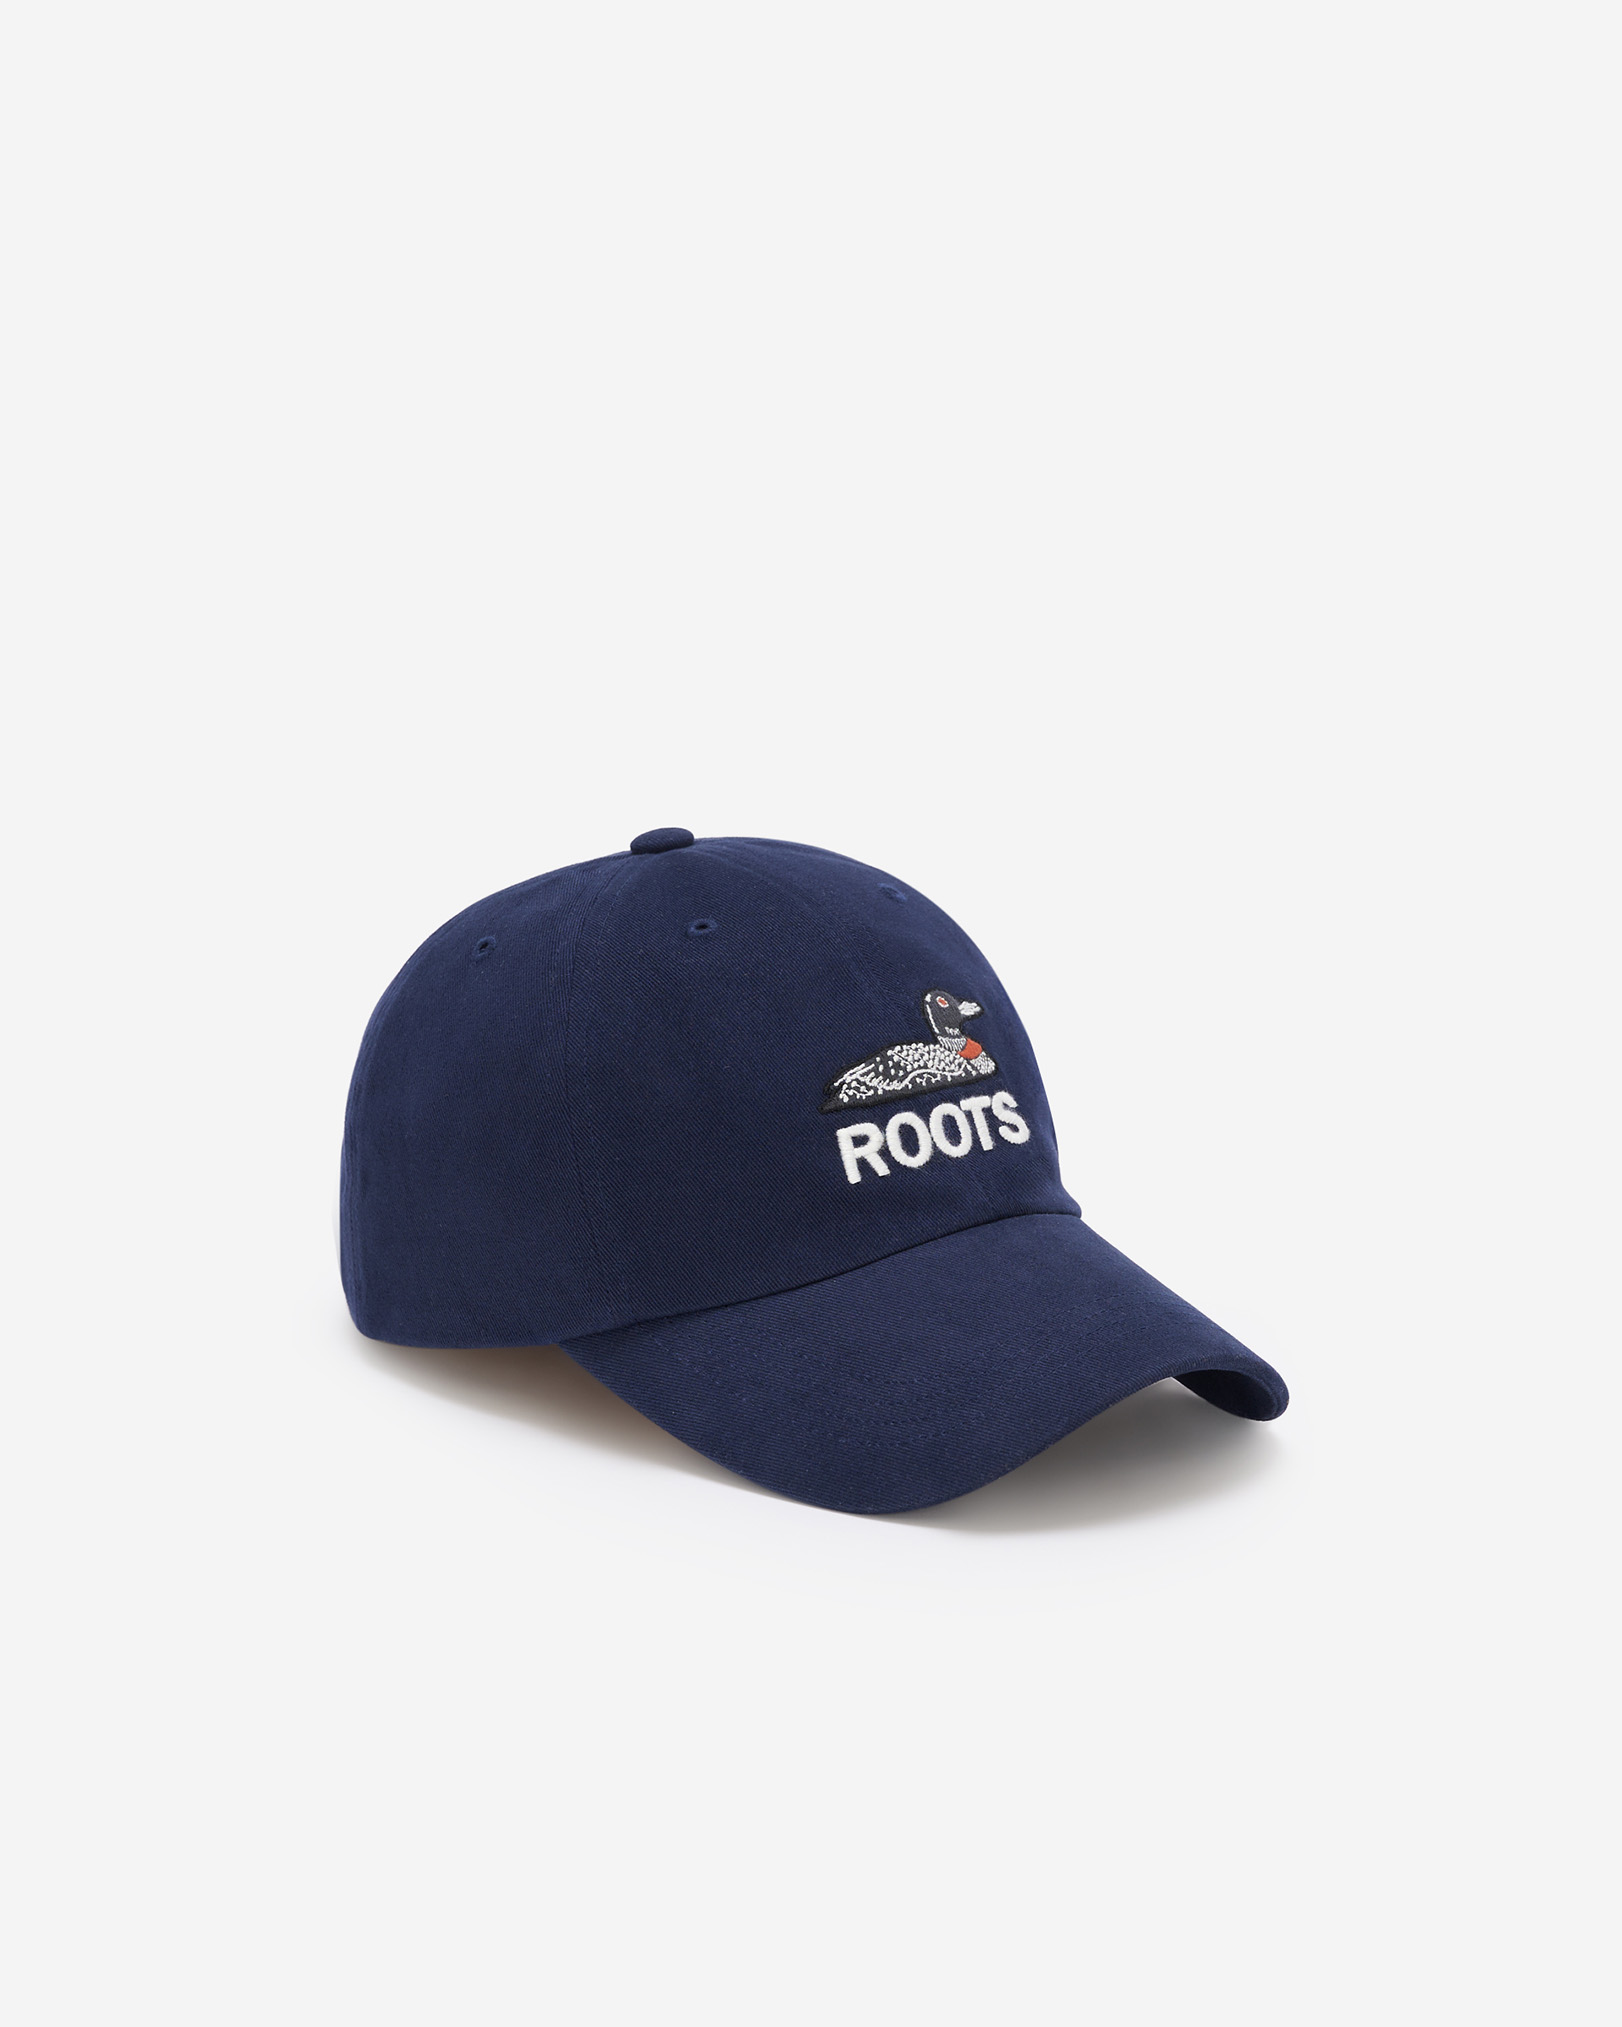 Roots True Nature Baseball Cap Hat in Navy Blazer